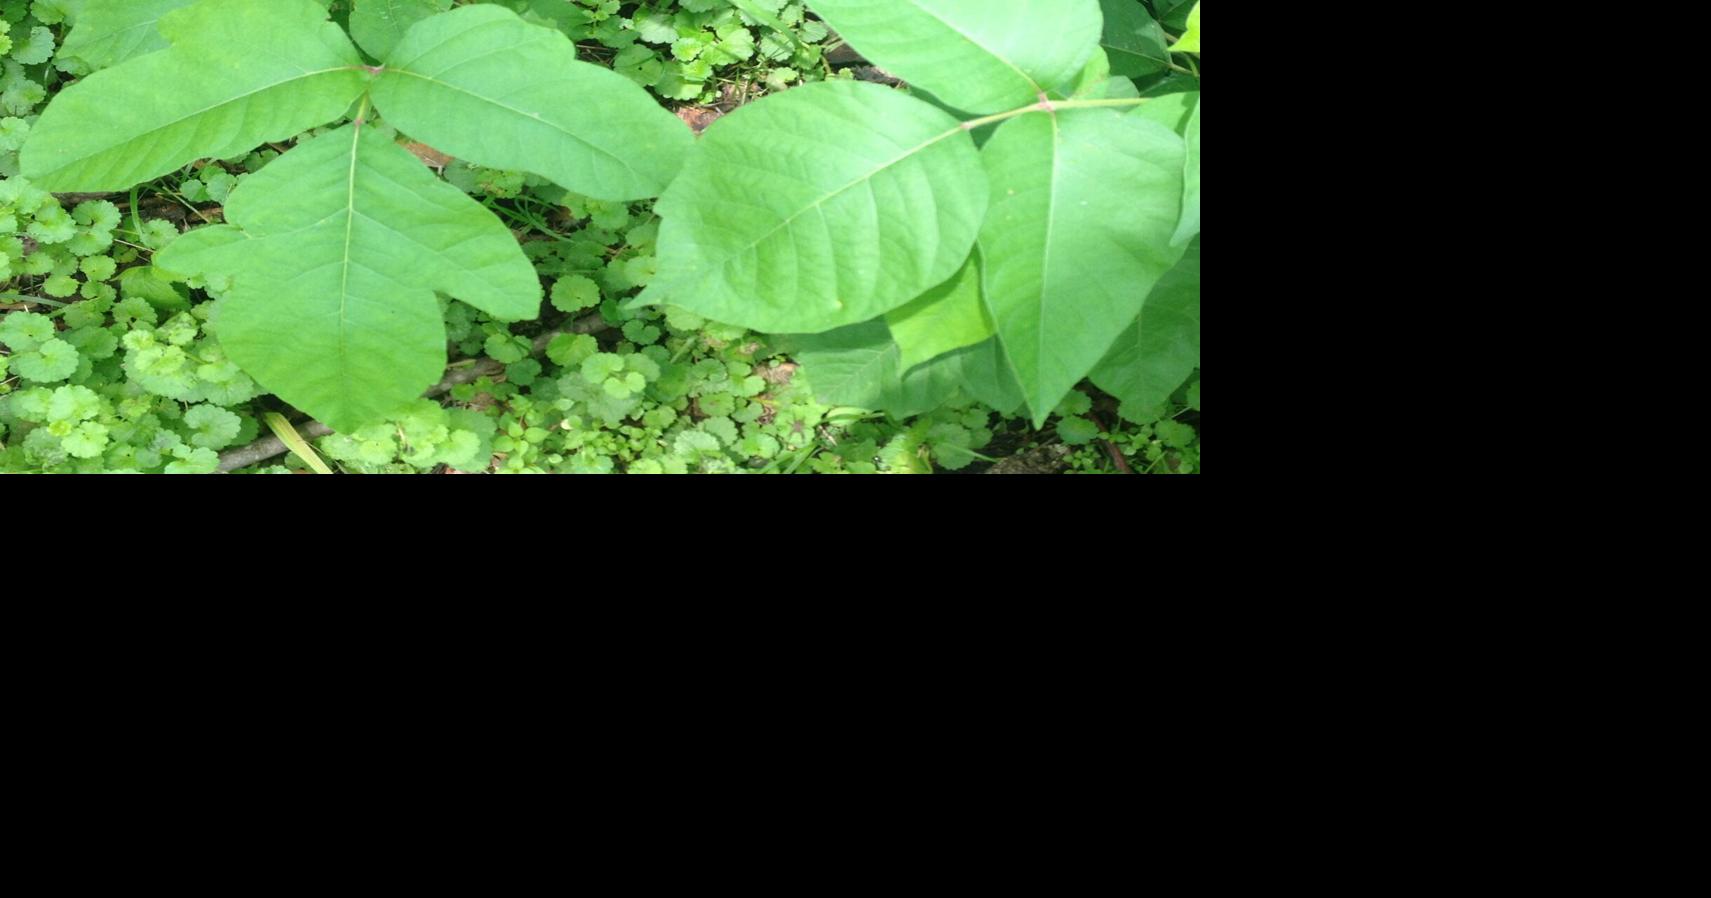 florida poison ivy